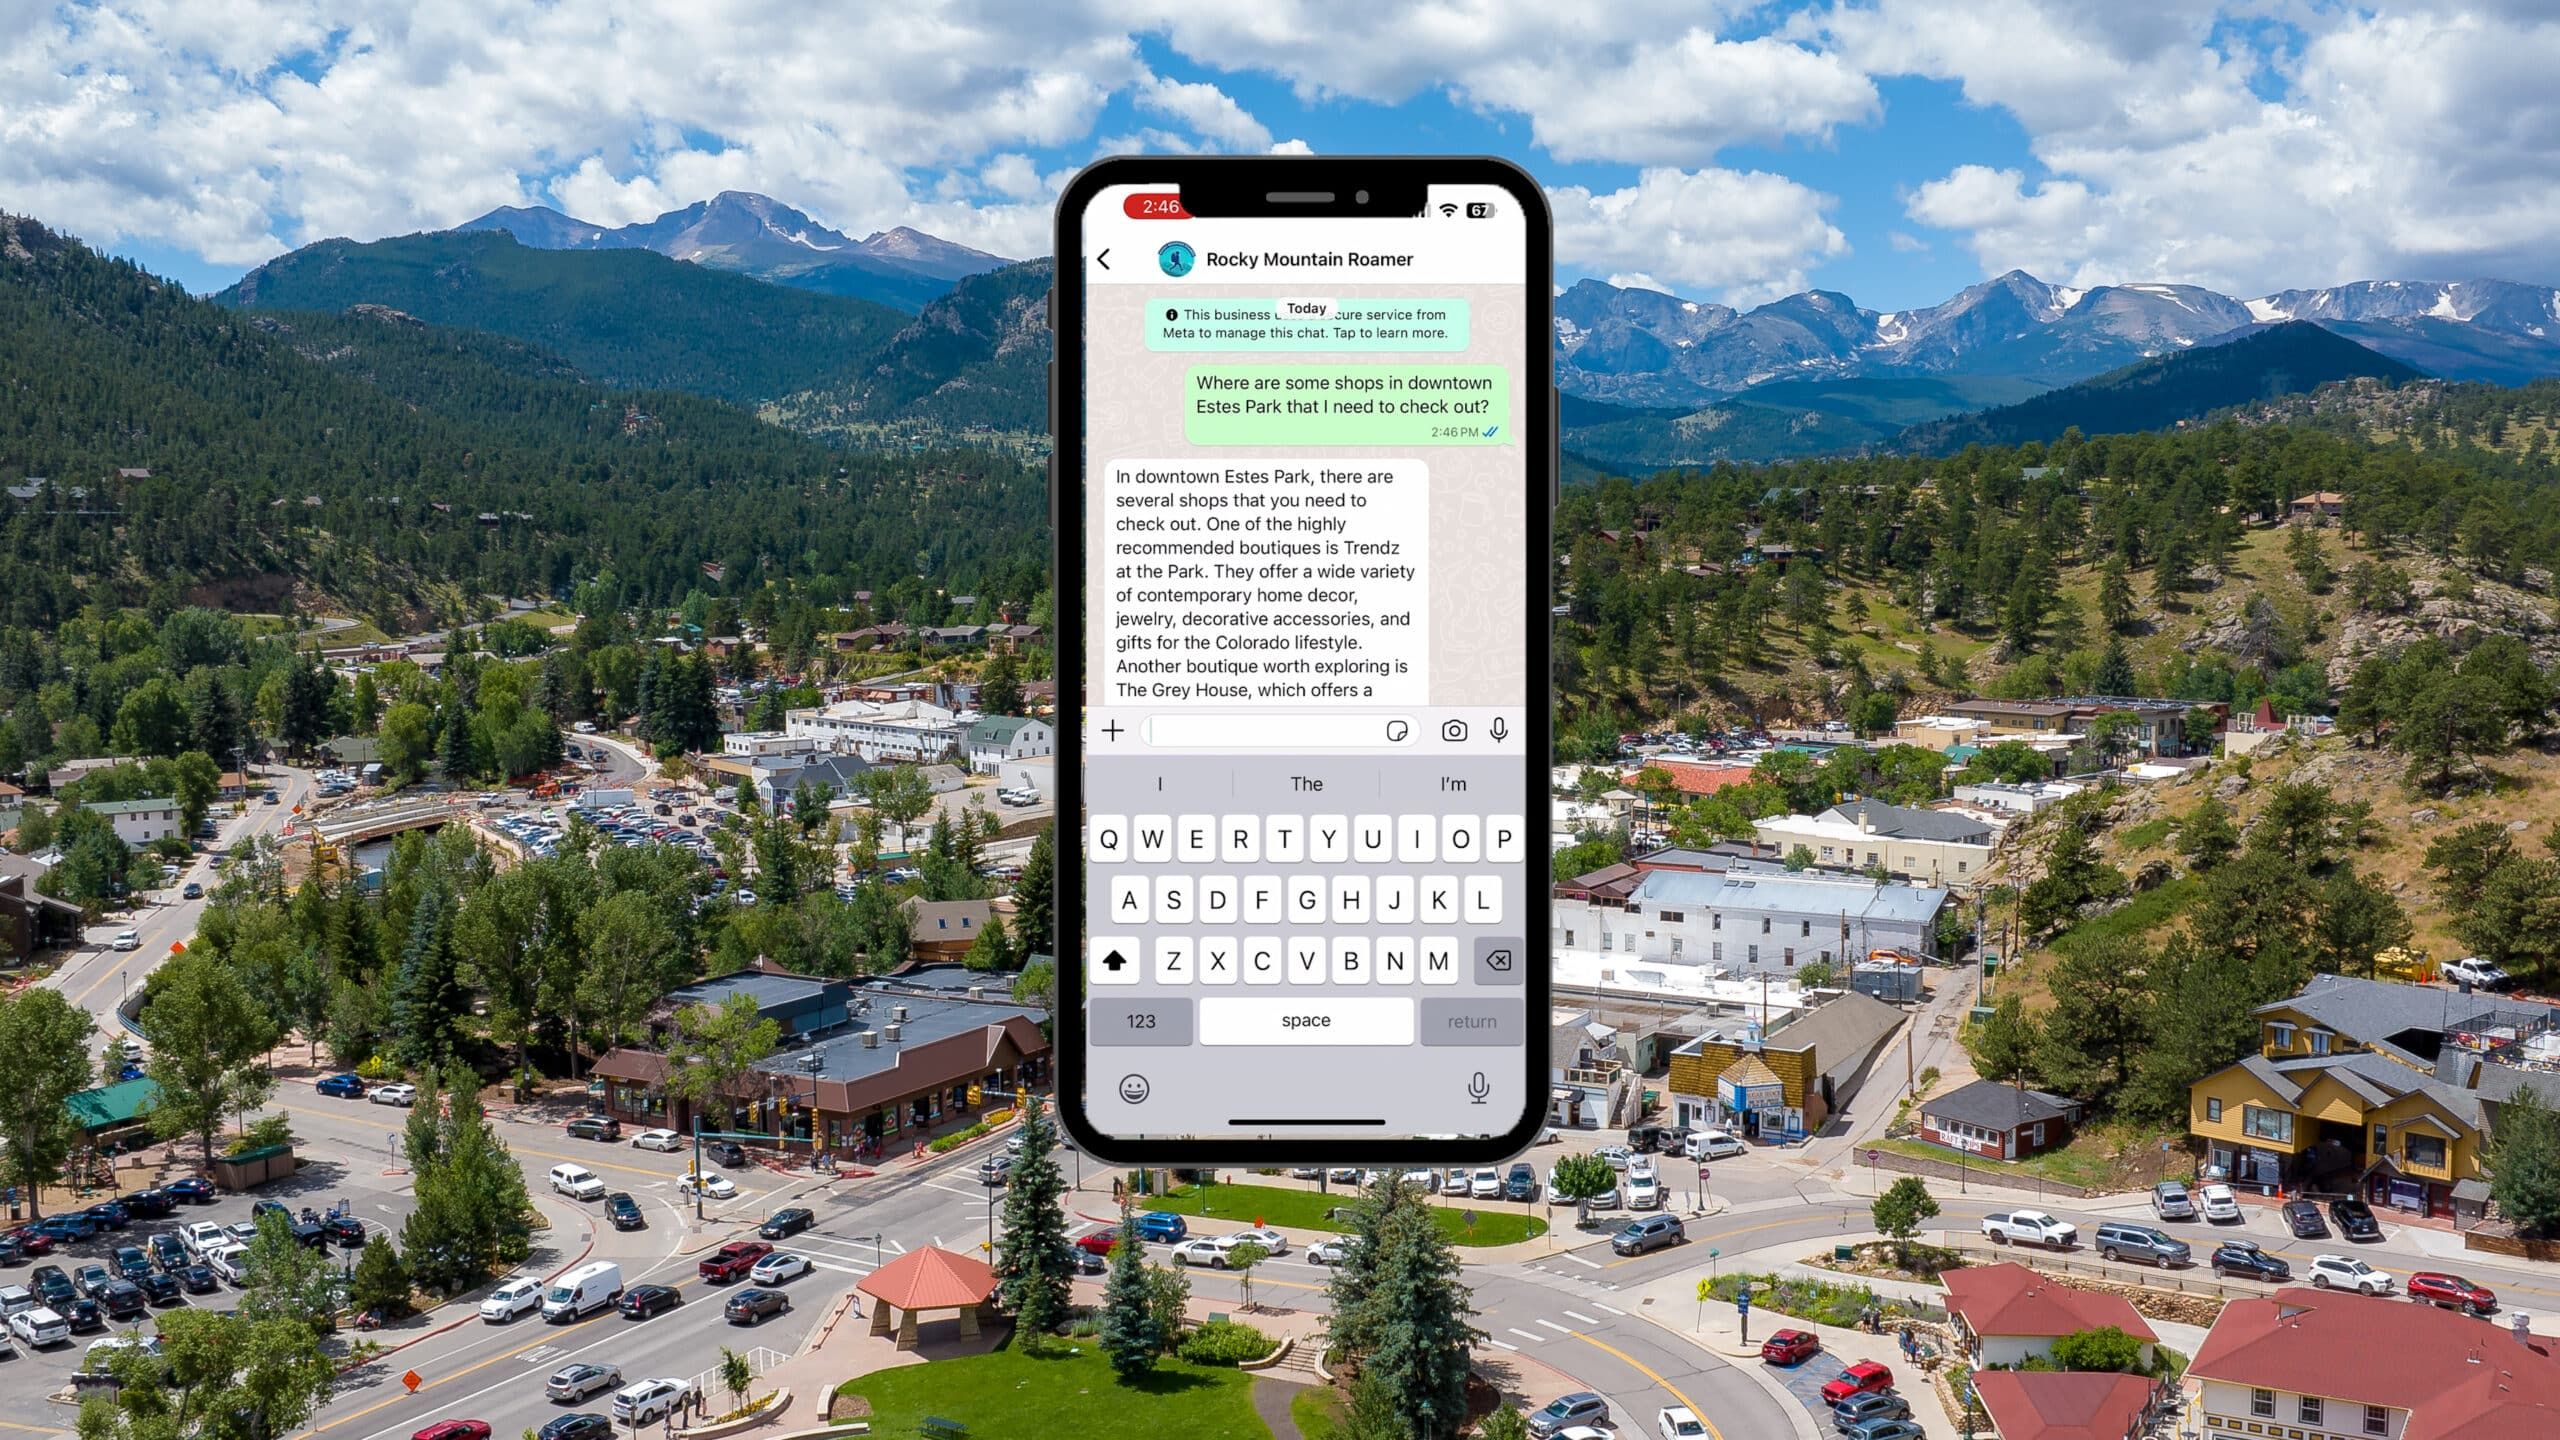 Visit Estes Park launches AI-based tool to aid visitors